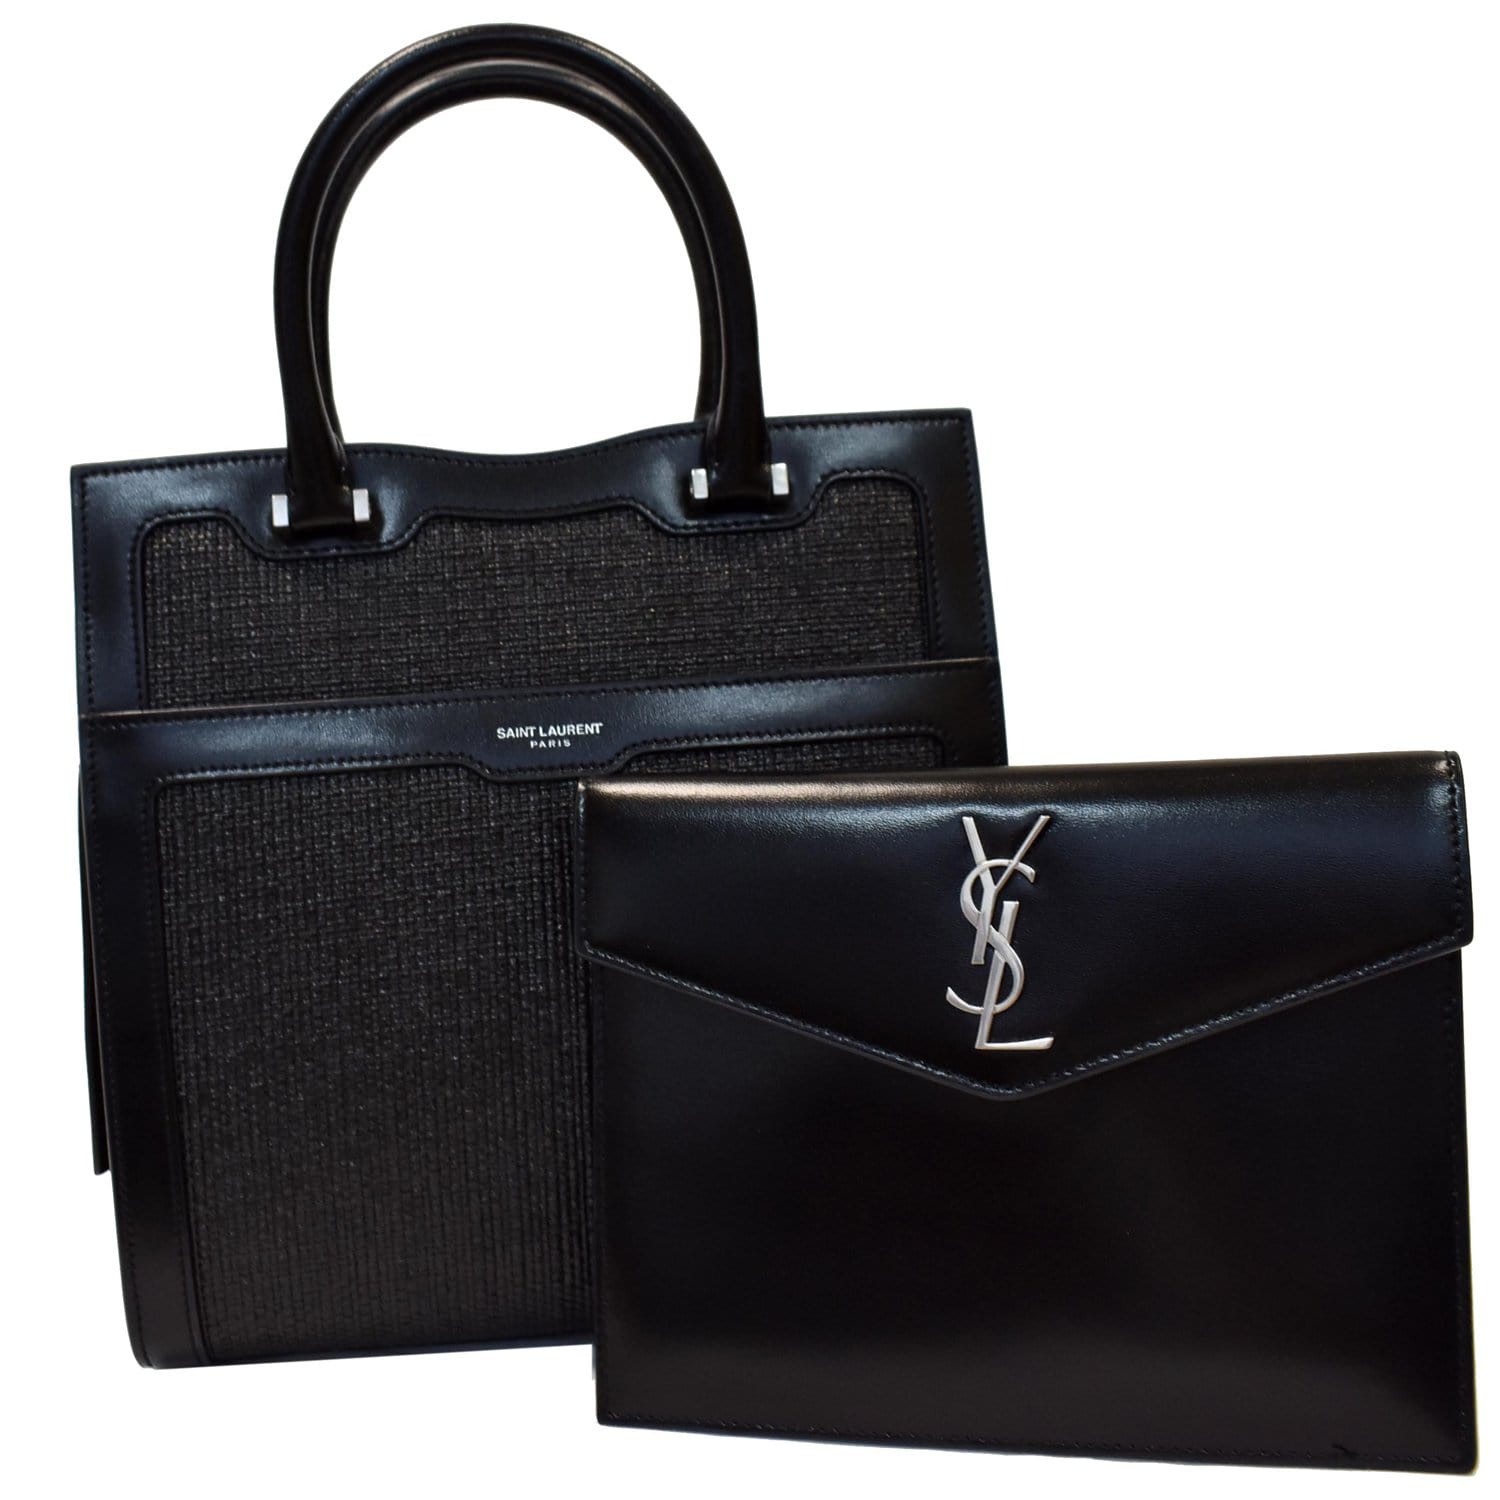 Yves Saint Laurent Black Smooth Leather Monogram Tote Bag